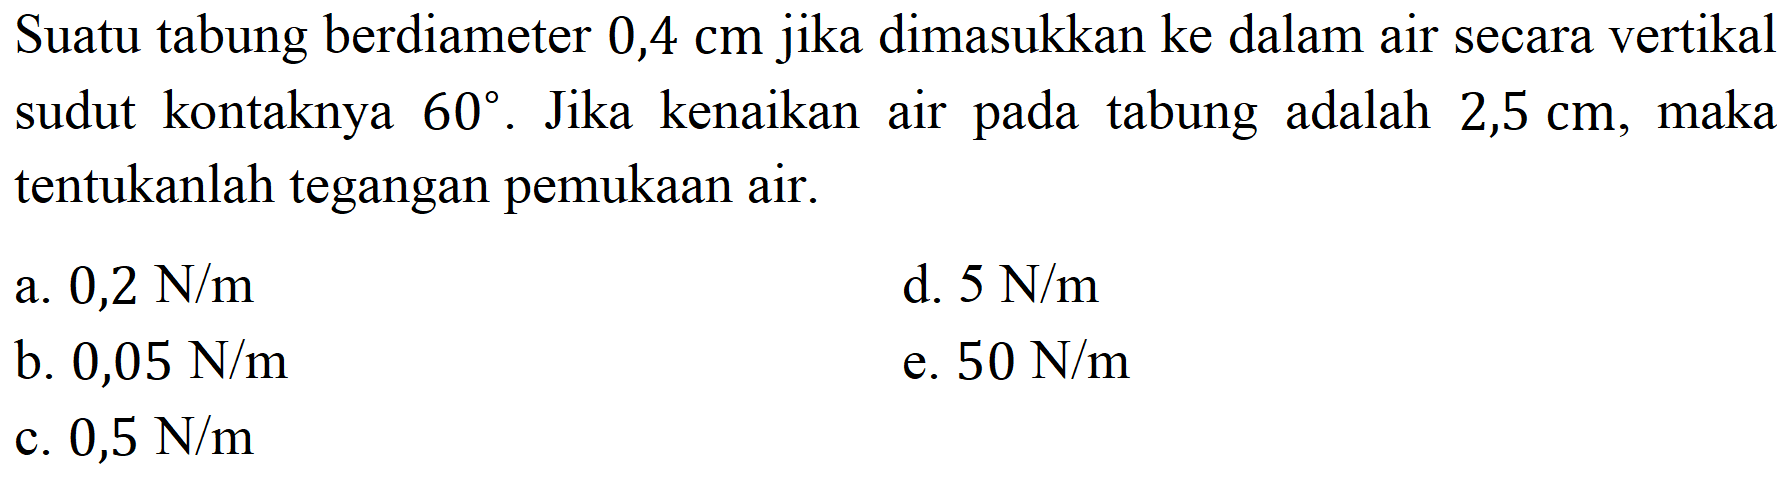 Suatu tabung berdiameter  0,4 cm  jika dimasukkan ke dalam air secara vertikal sudut kontaknya  60 . Jika kenaikan air pada tabung adalah 2,5 cm, maka tentukanlah tegangan pemukaan air.
a.  0,2 ~N / m 
d.  5 ~N / m 
b.  0,05 ~N / m 
e.  50 ~N / m 
c.  0,5 ~N / m 